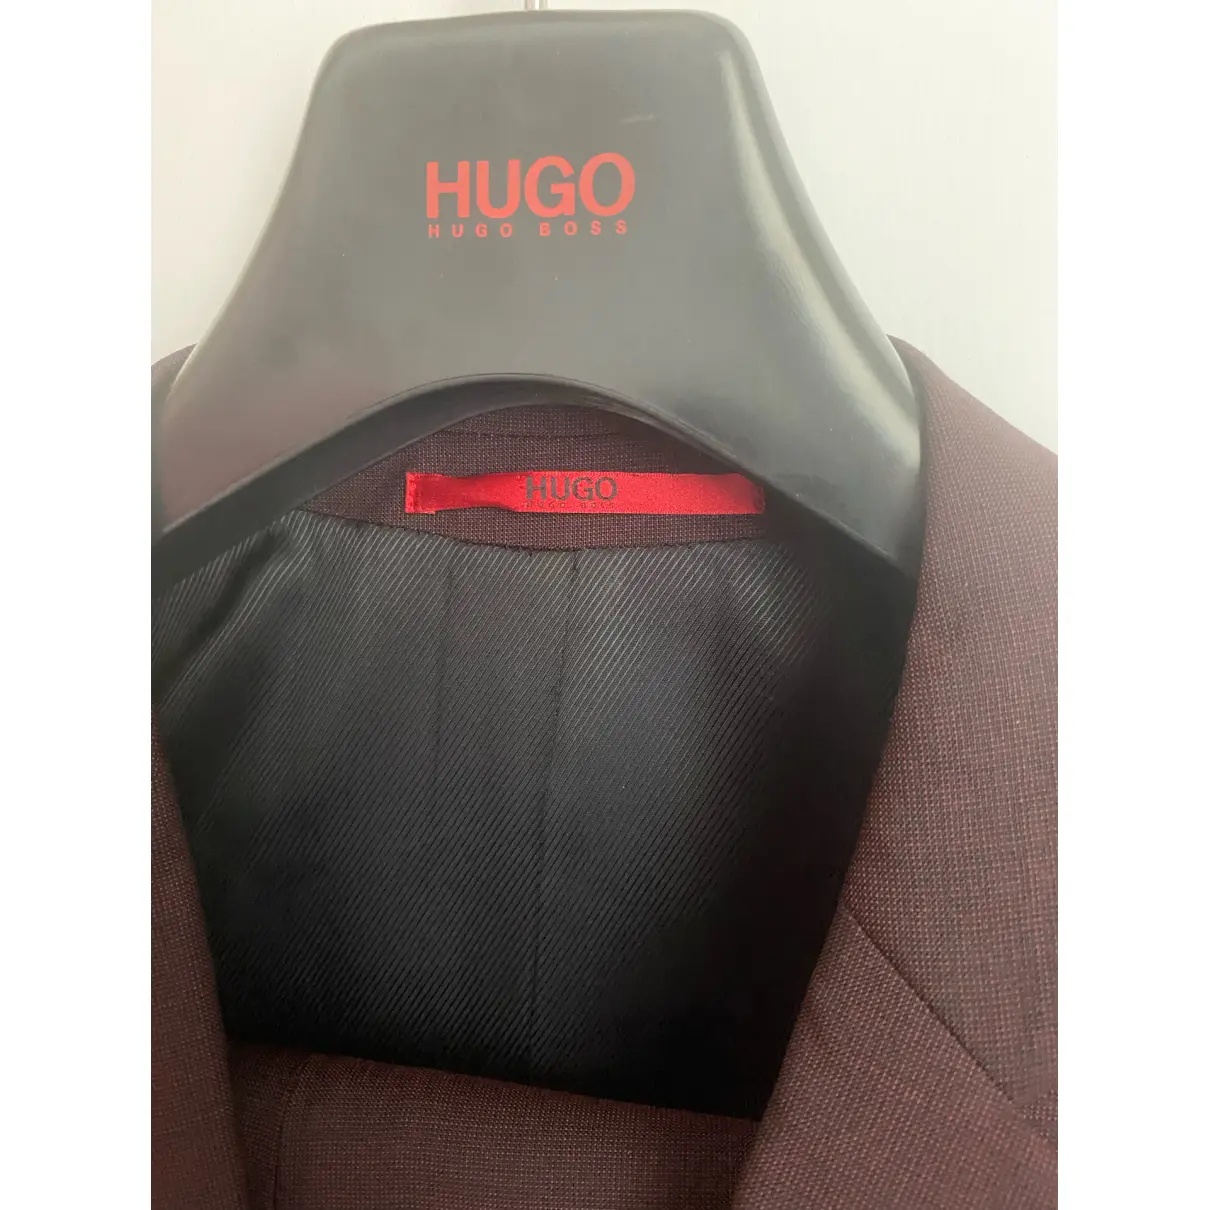 Suit Hugo Boss